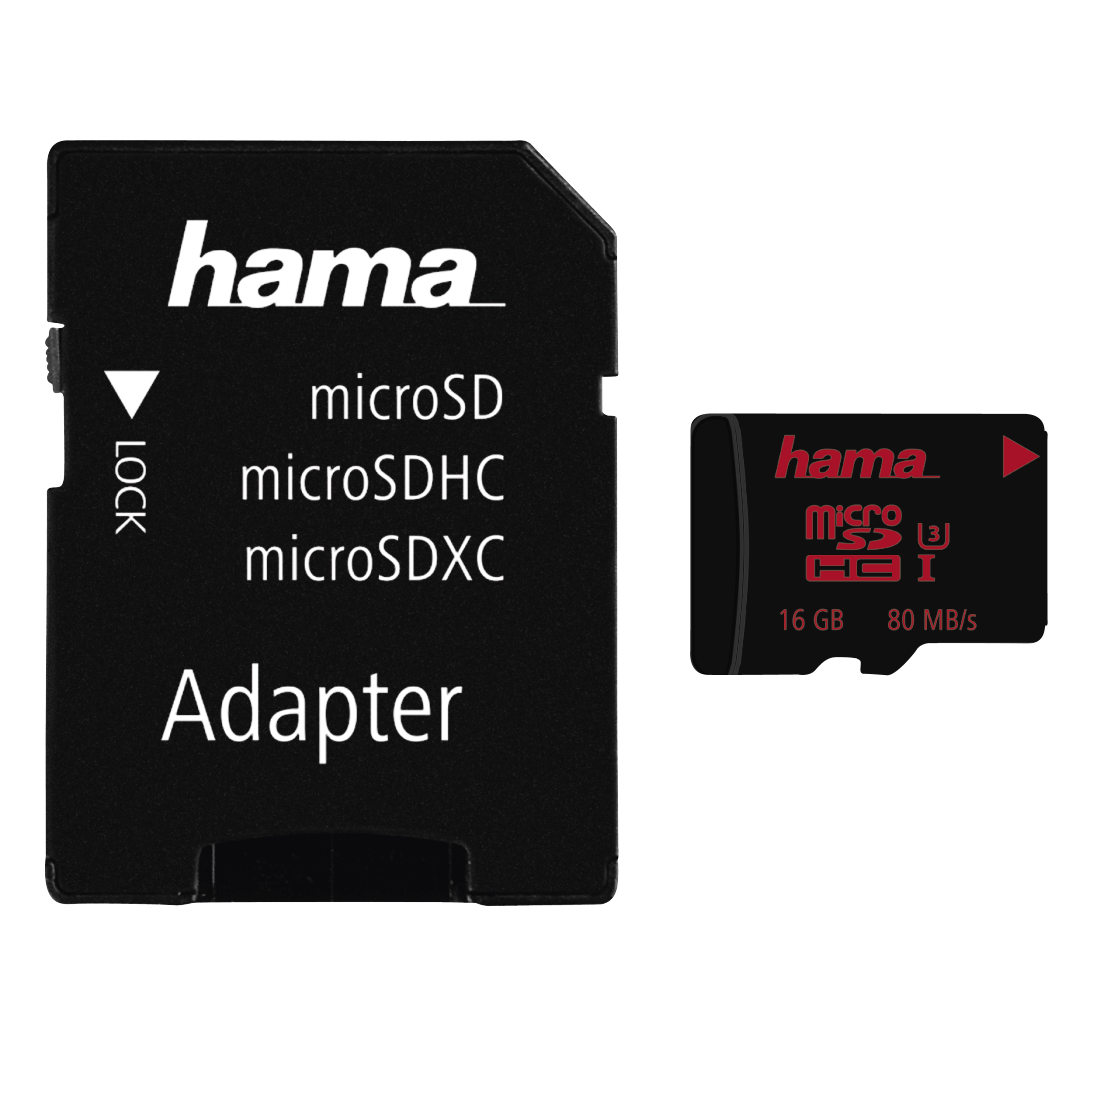 You Recently Viewed Hama 16GB Class 3 microSDHC UHS Image